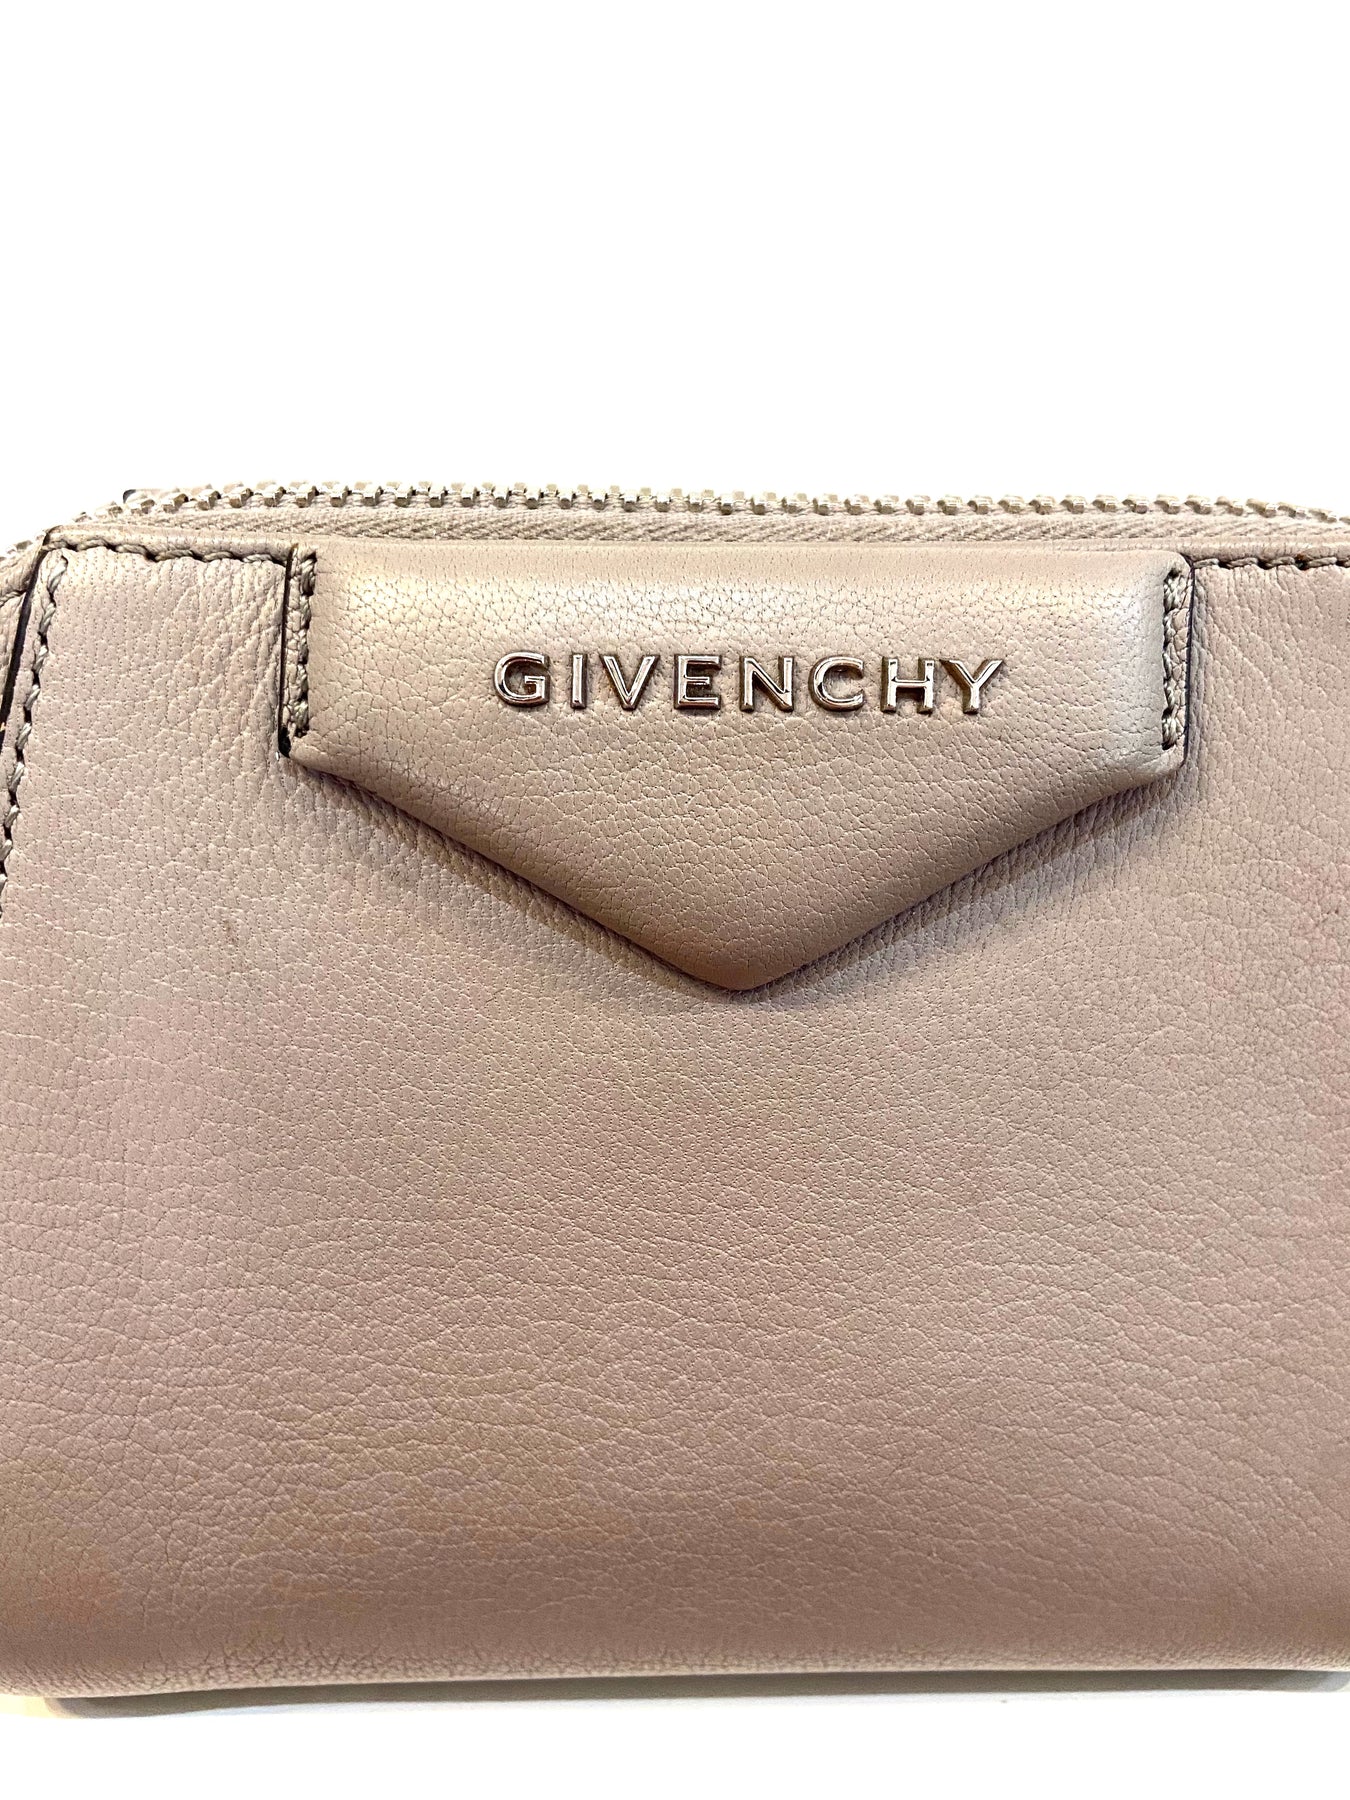 Givenchy Nano Antigona Leather Crossbody Bag